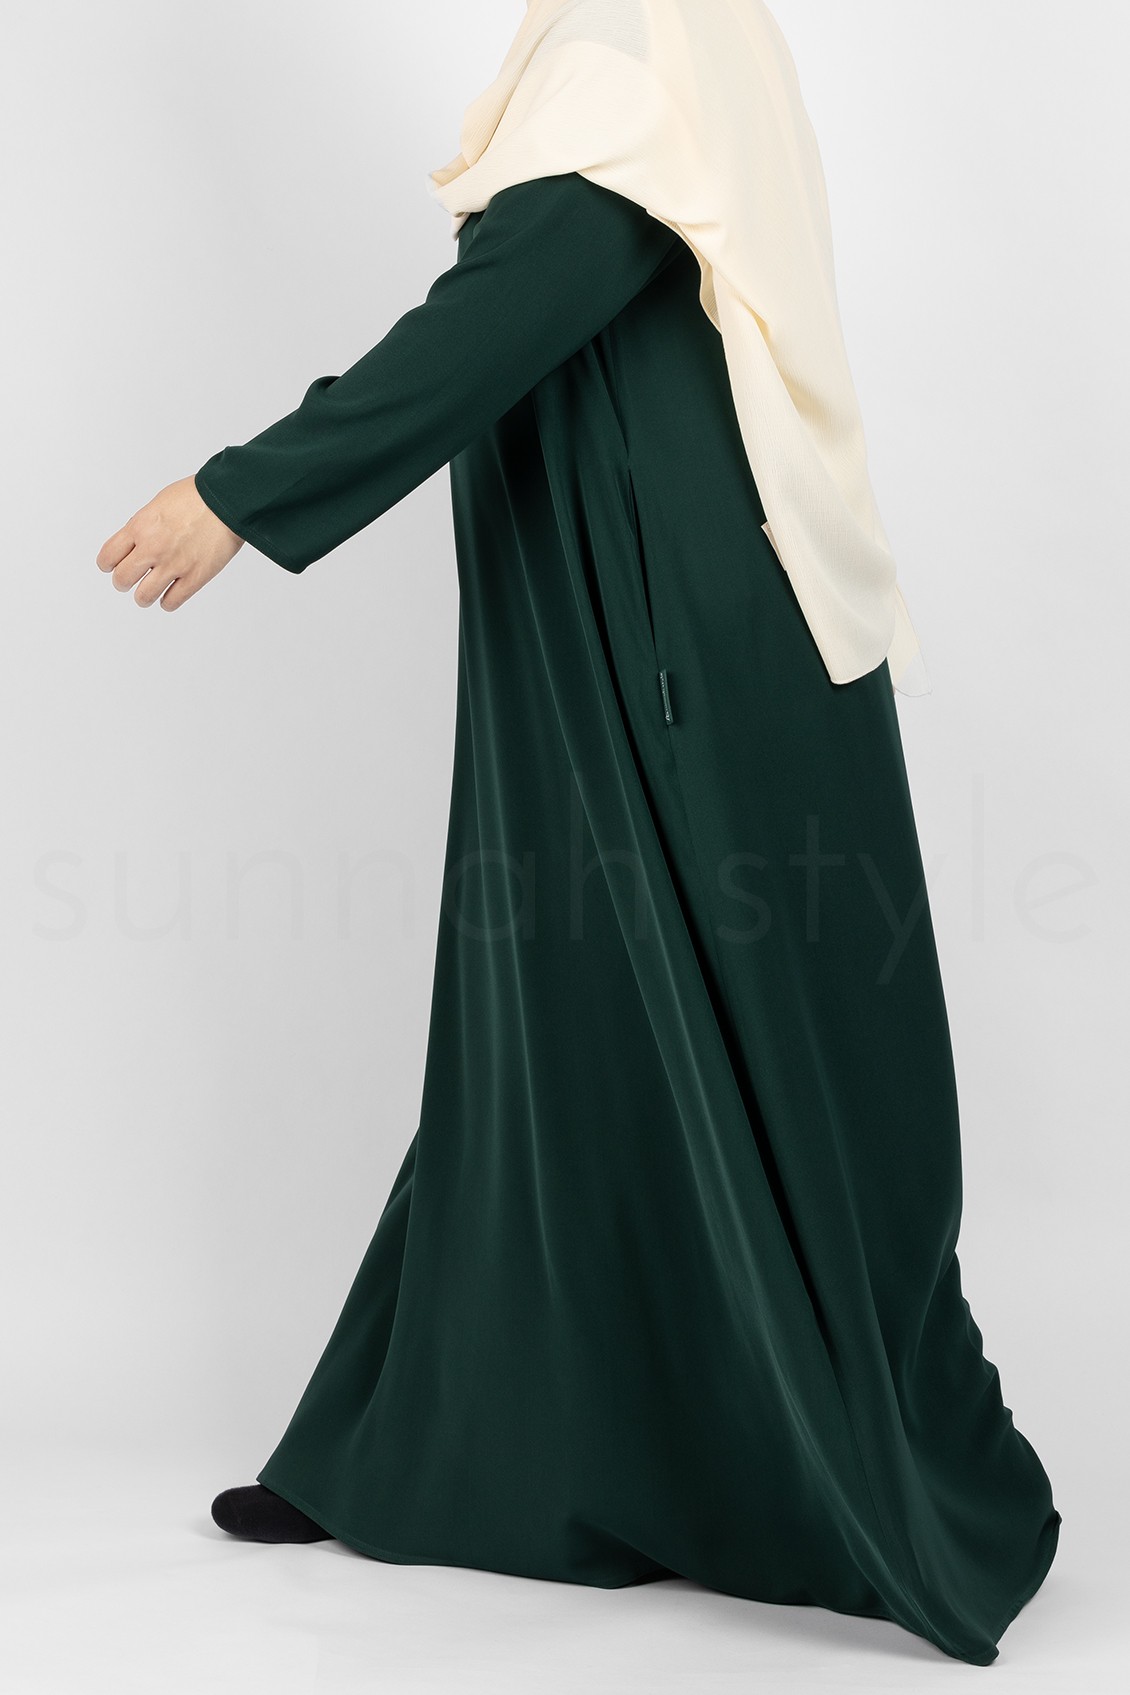 Sunnah Style Essentials Closed Abaya Pine